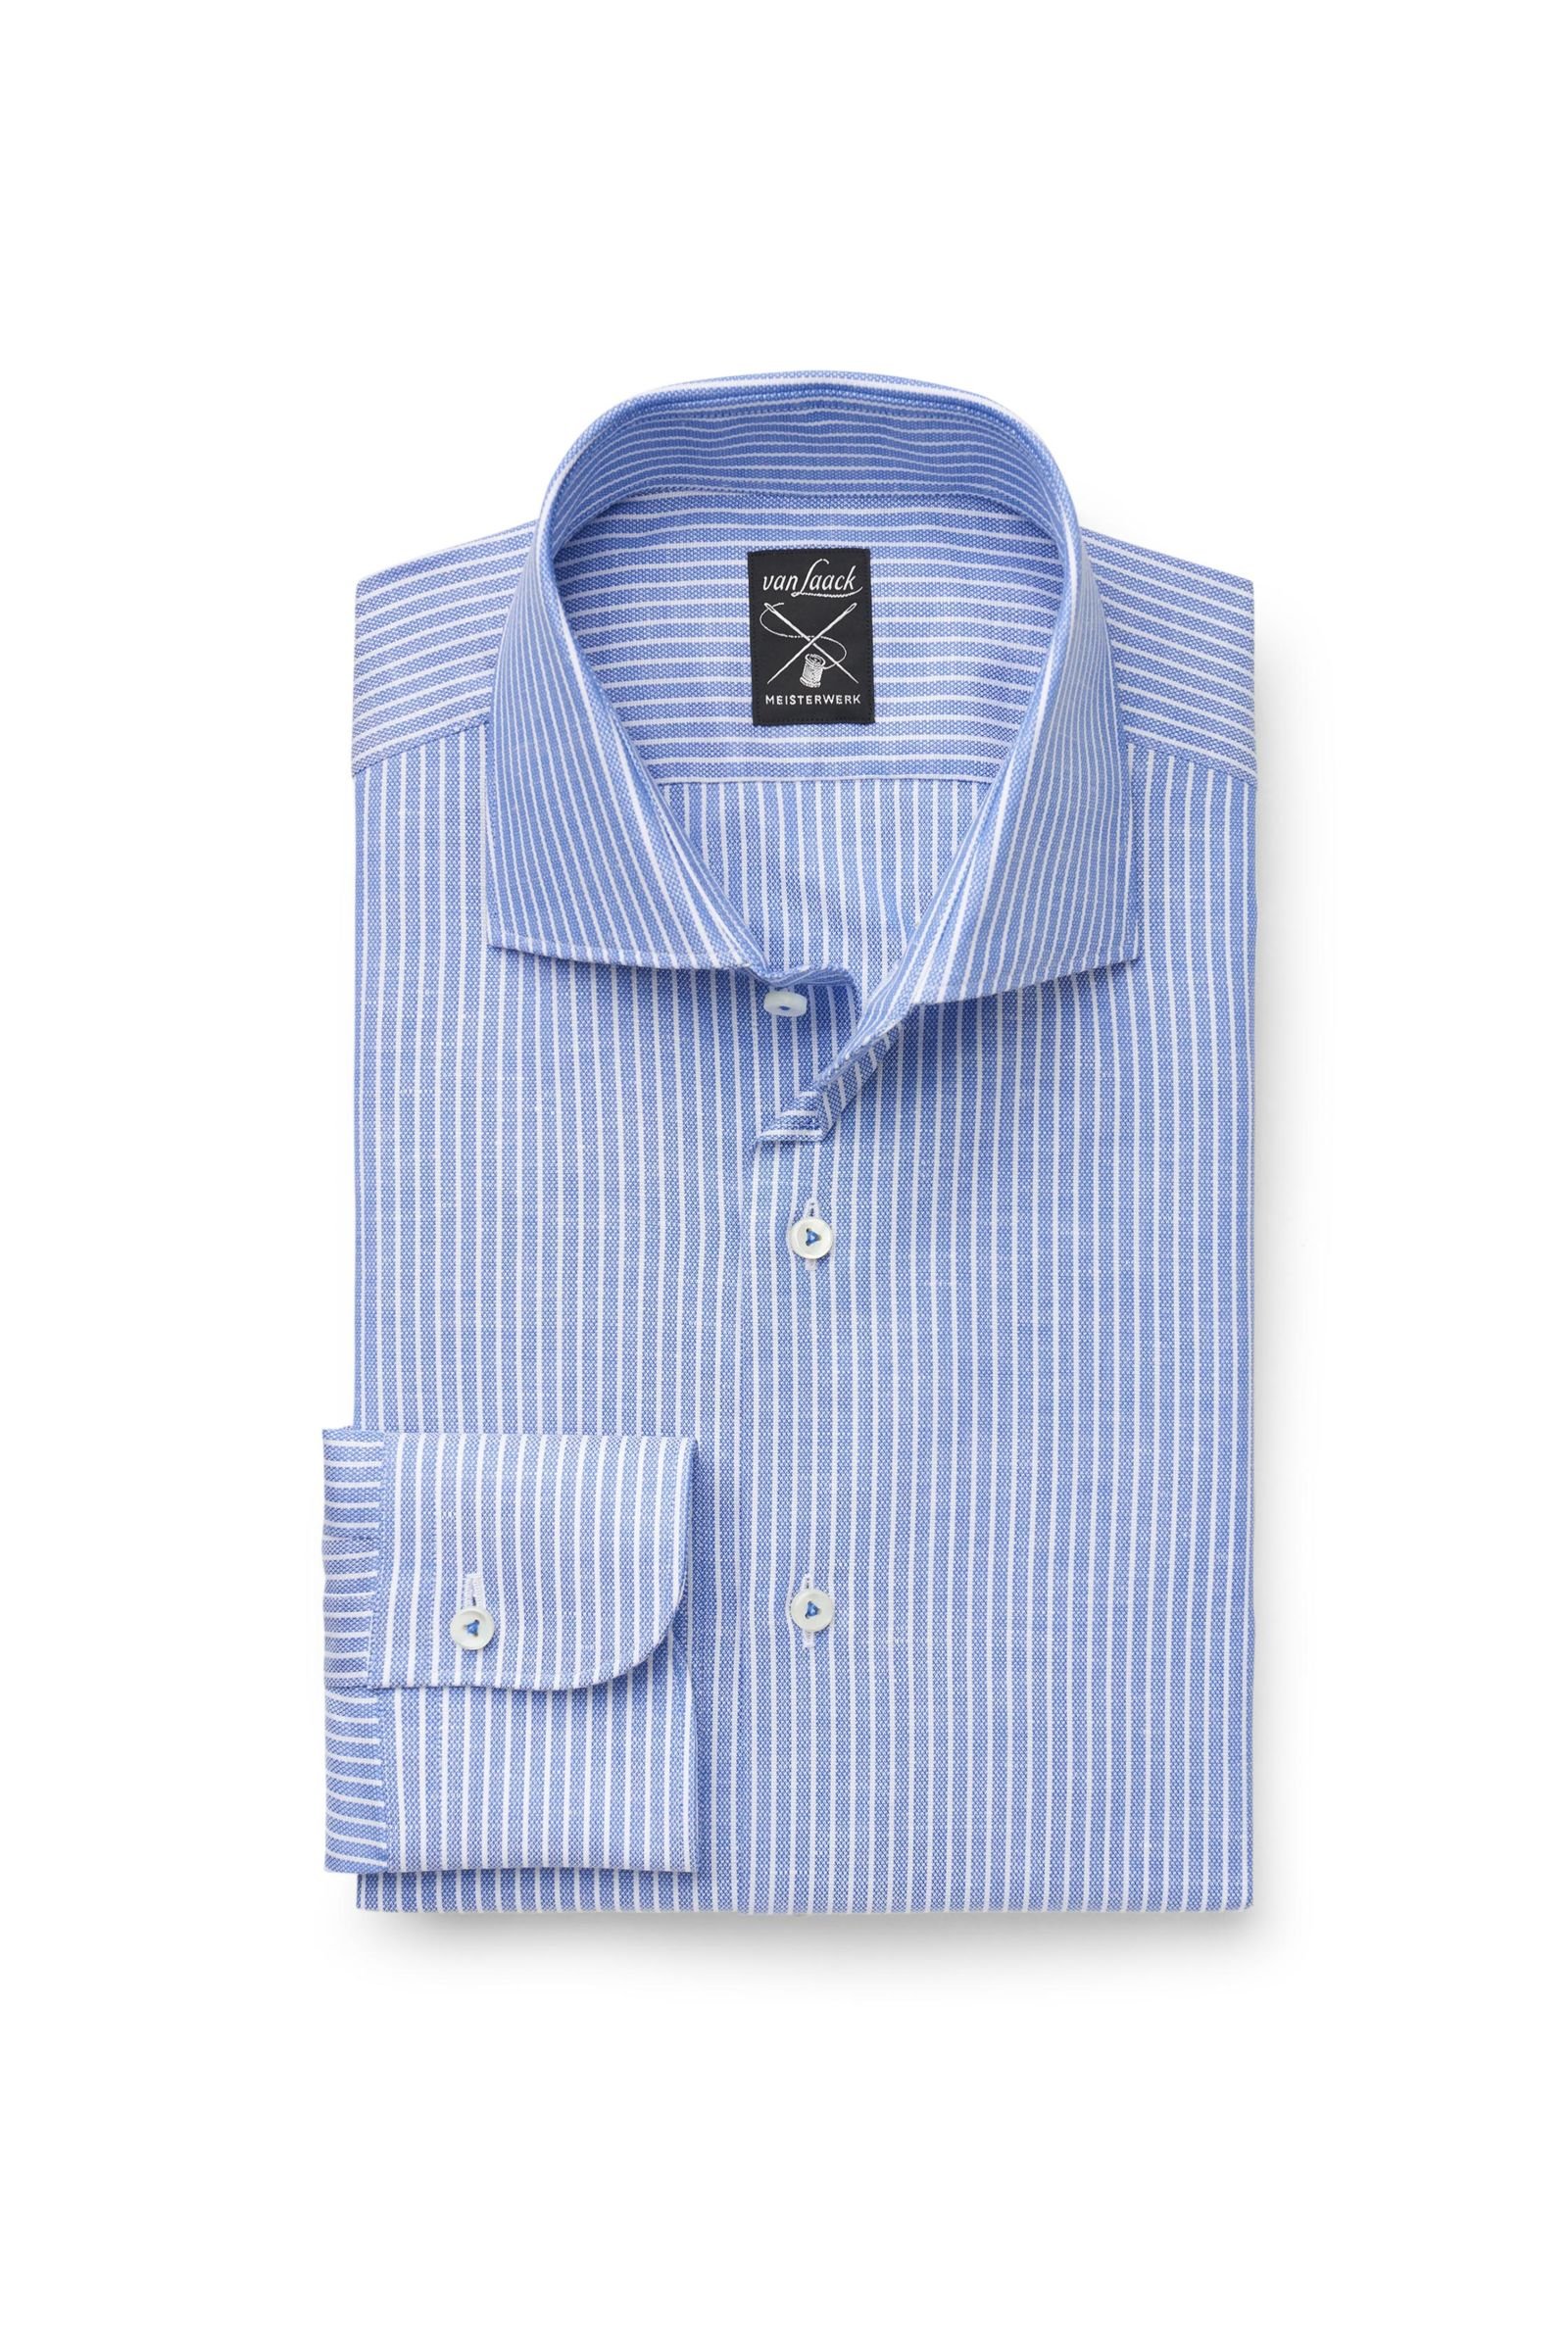 Business shirt 'Mivara Tailor Fit' shark collar blue/white striped